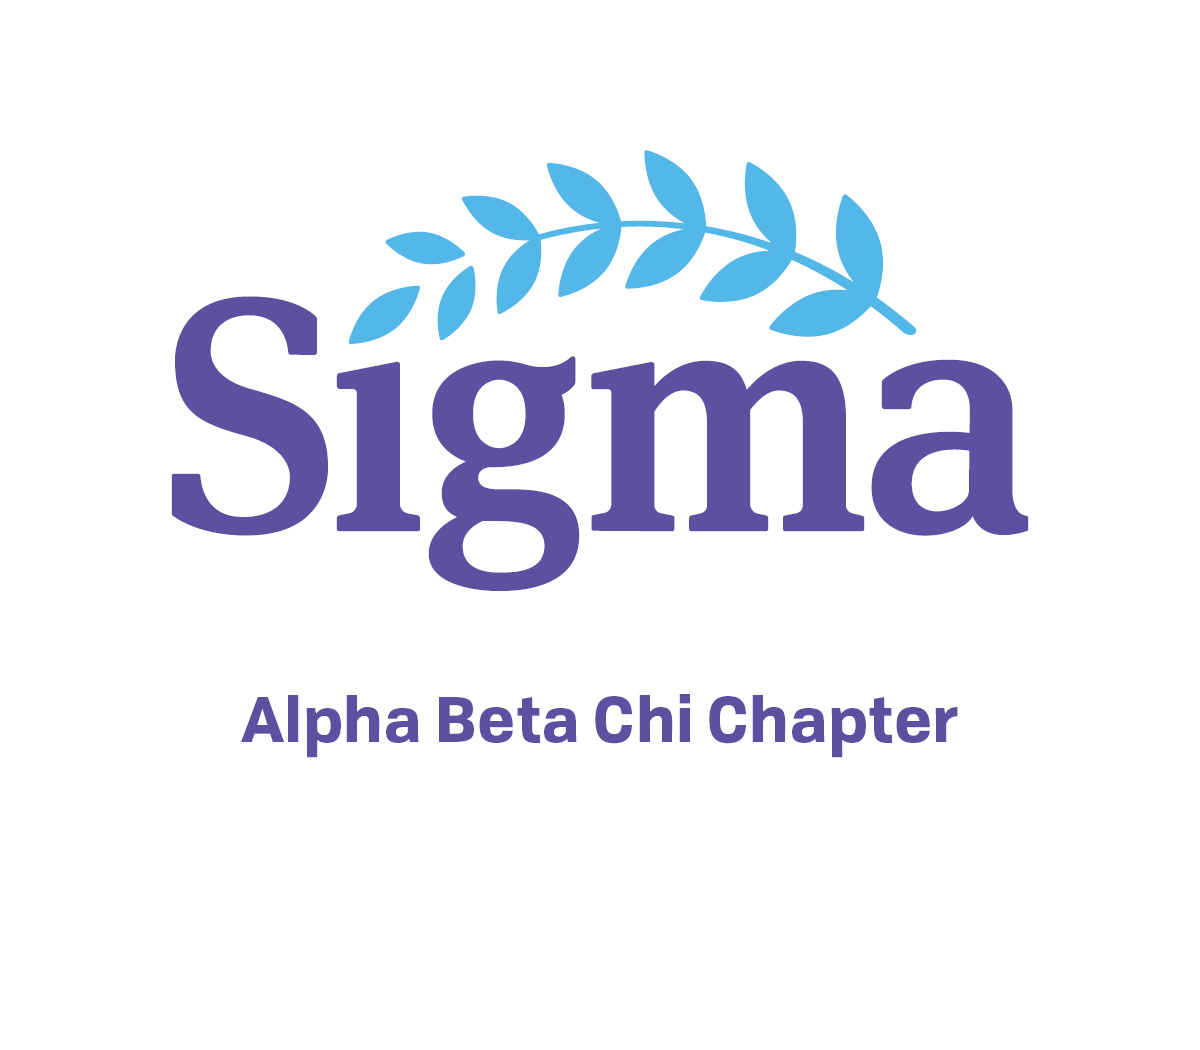 Sigma Alpha Beta Chi Chapter Logo